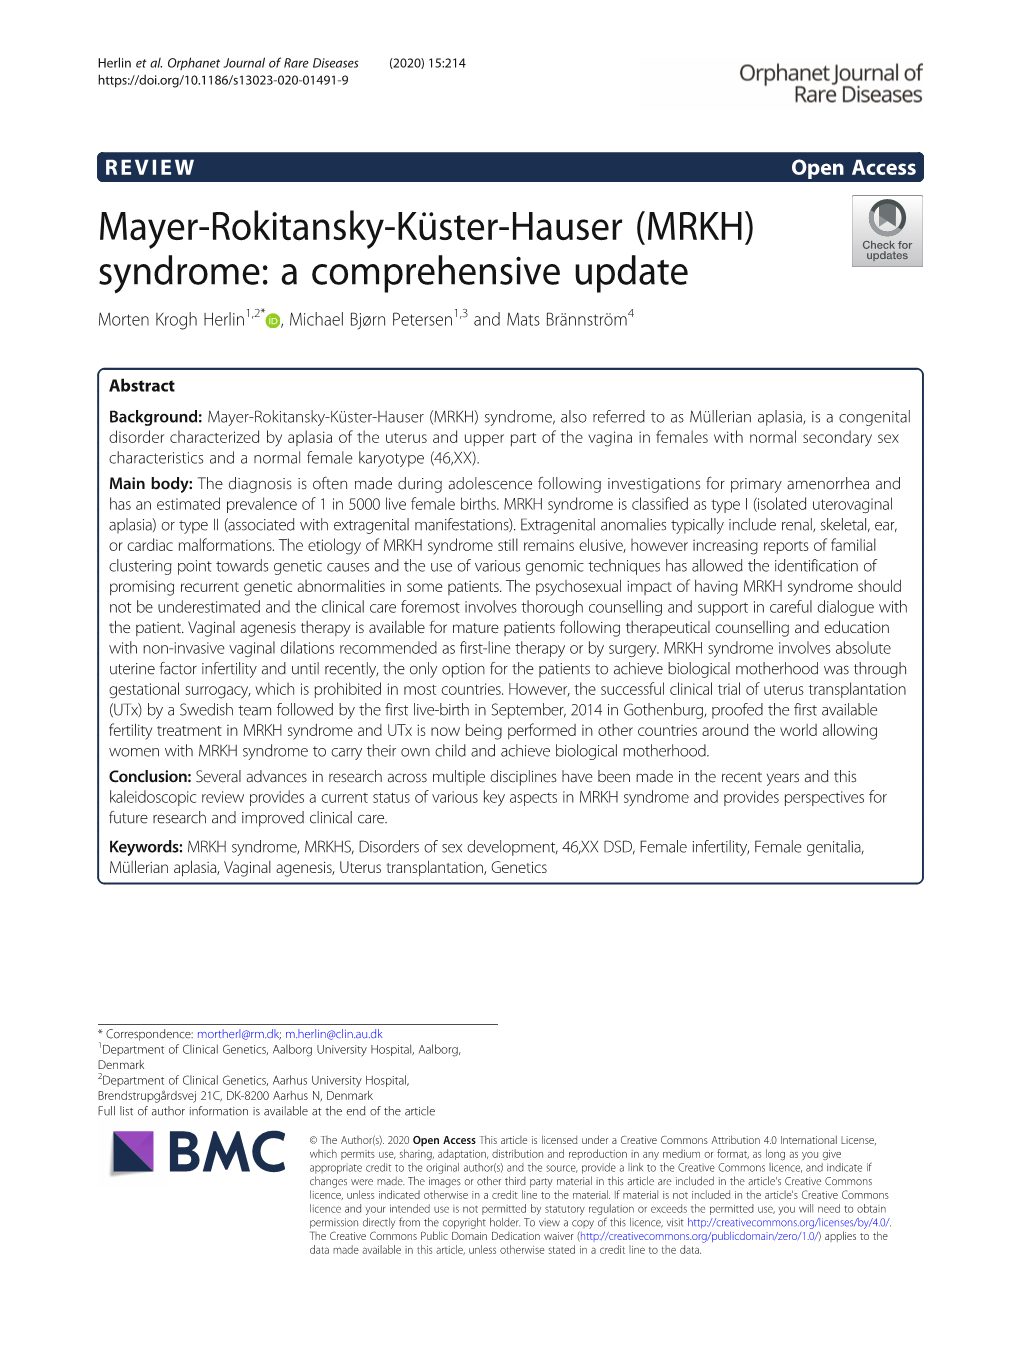 Mayer-Rokitansky-Küster-Hauser (MRKH) Syndrome: a Comprehensive Update Morten Krogh Herlin1,2* , Michael Bjørn Petersen1,3 and Mats Brännström4